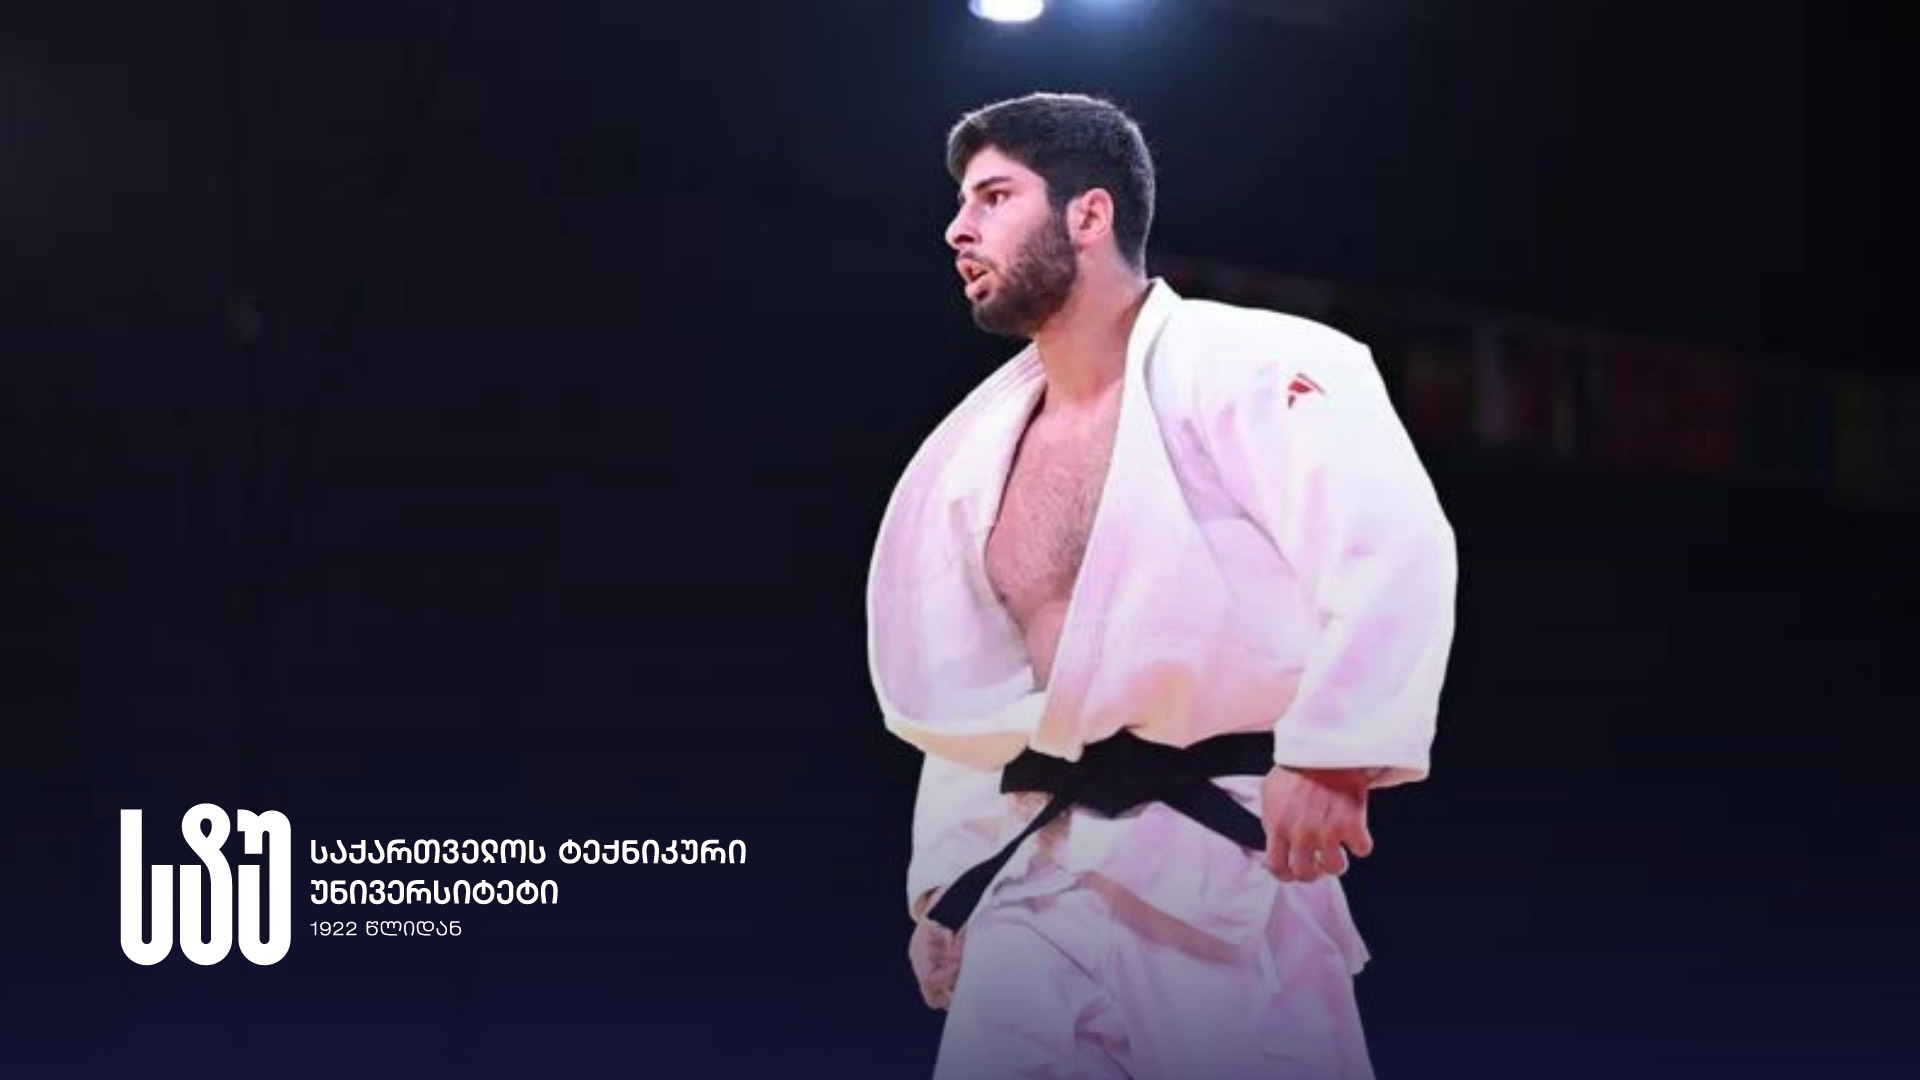 Georgian Technical University congratulates judoka Ilia Sulamanidze on winning the silver prize at the Paris Olympics